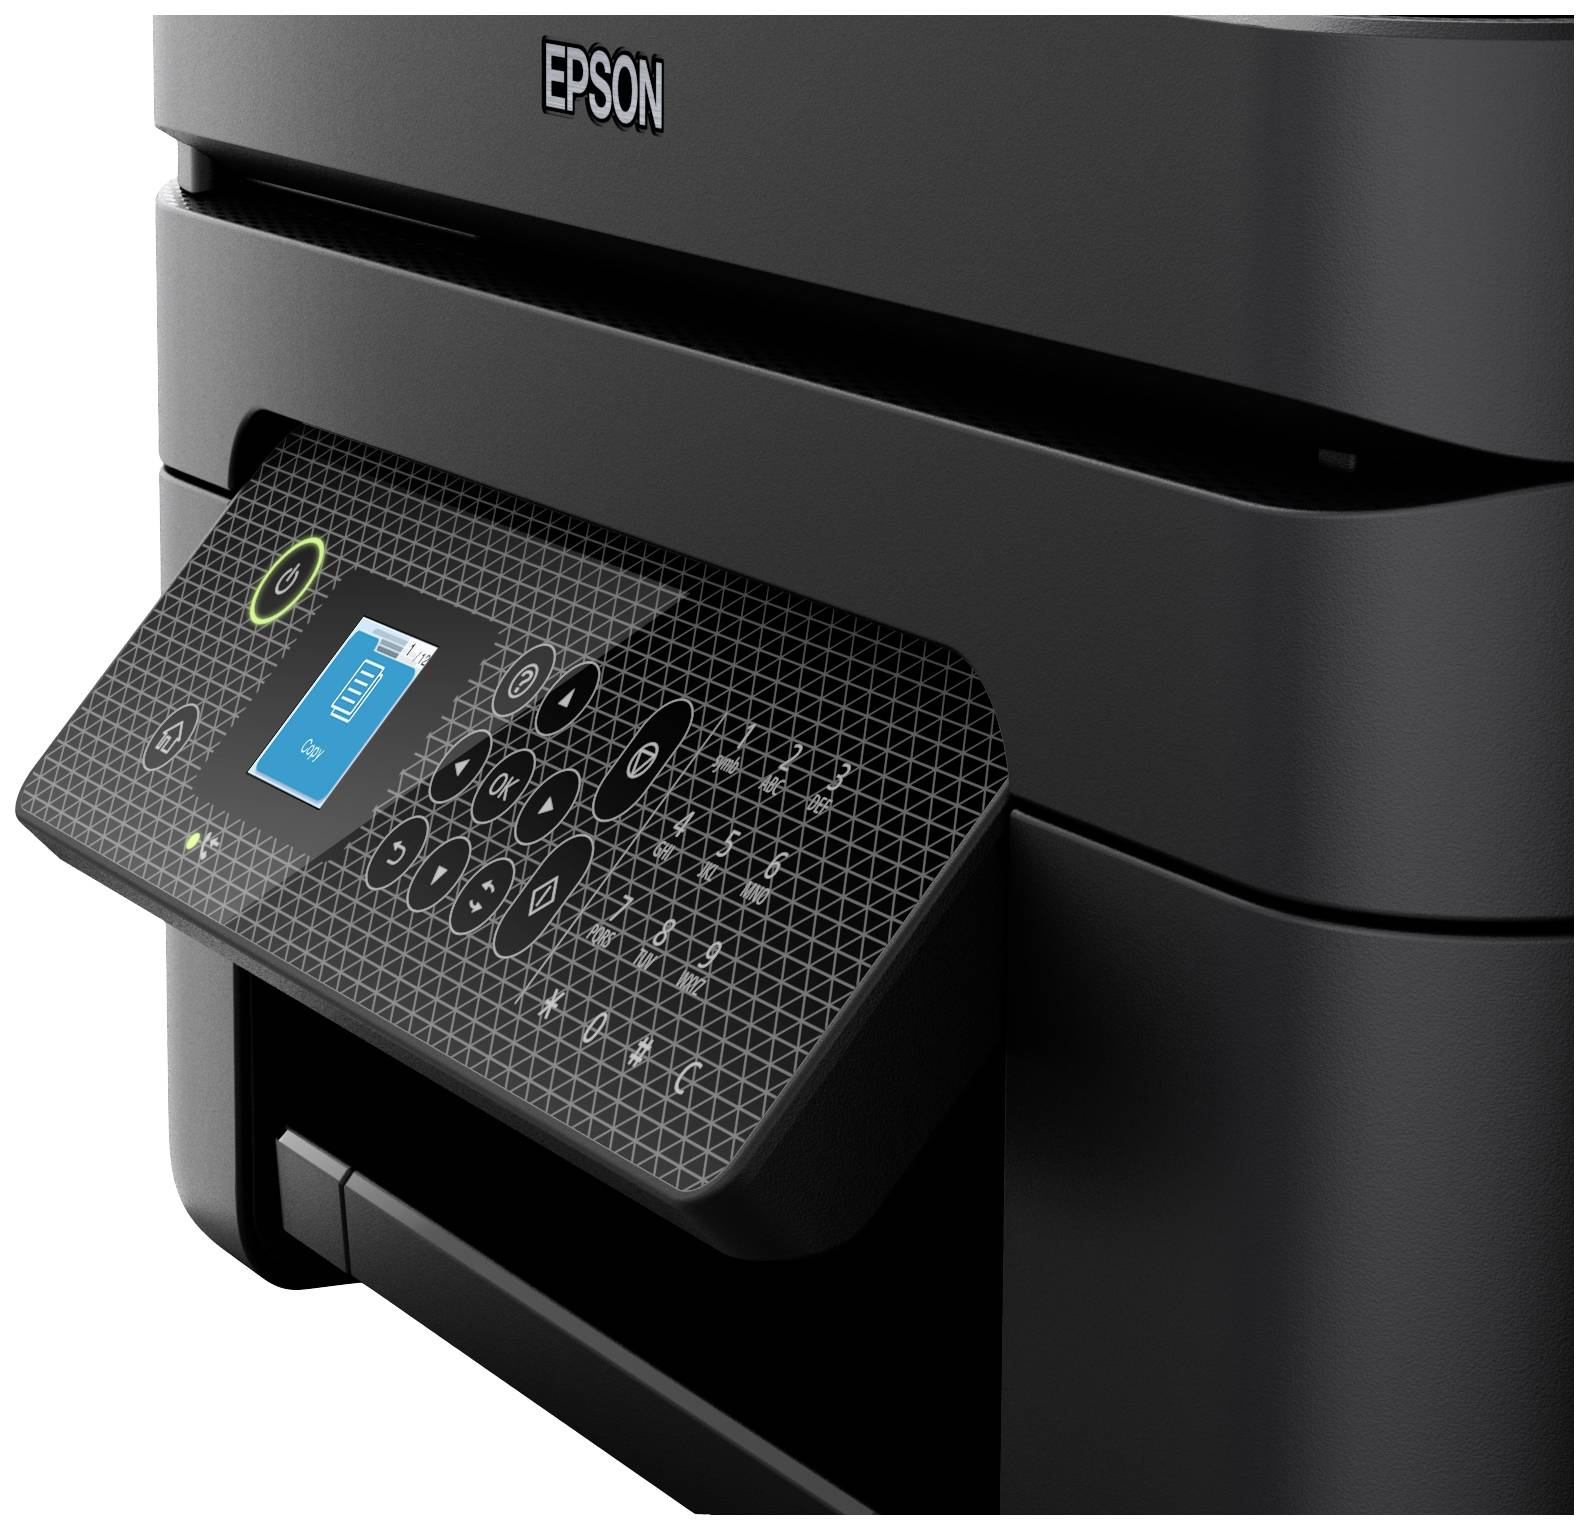 Epson Workforce Wf 2930dwf Inkjet Multifunction Printer A4 Printer Scanner Copier Fax 1384